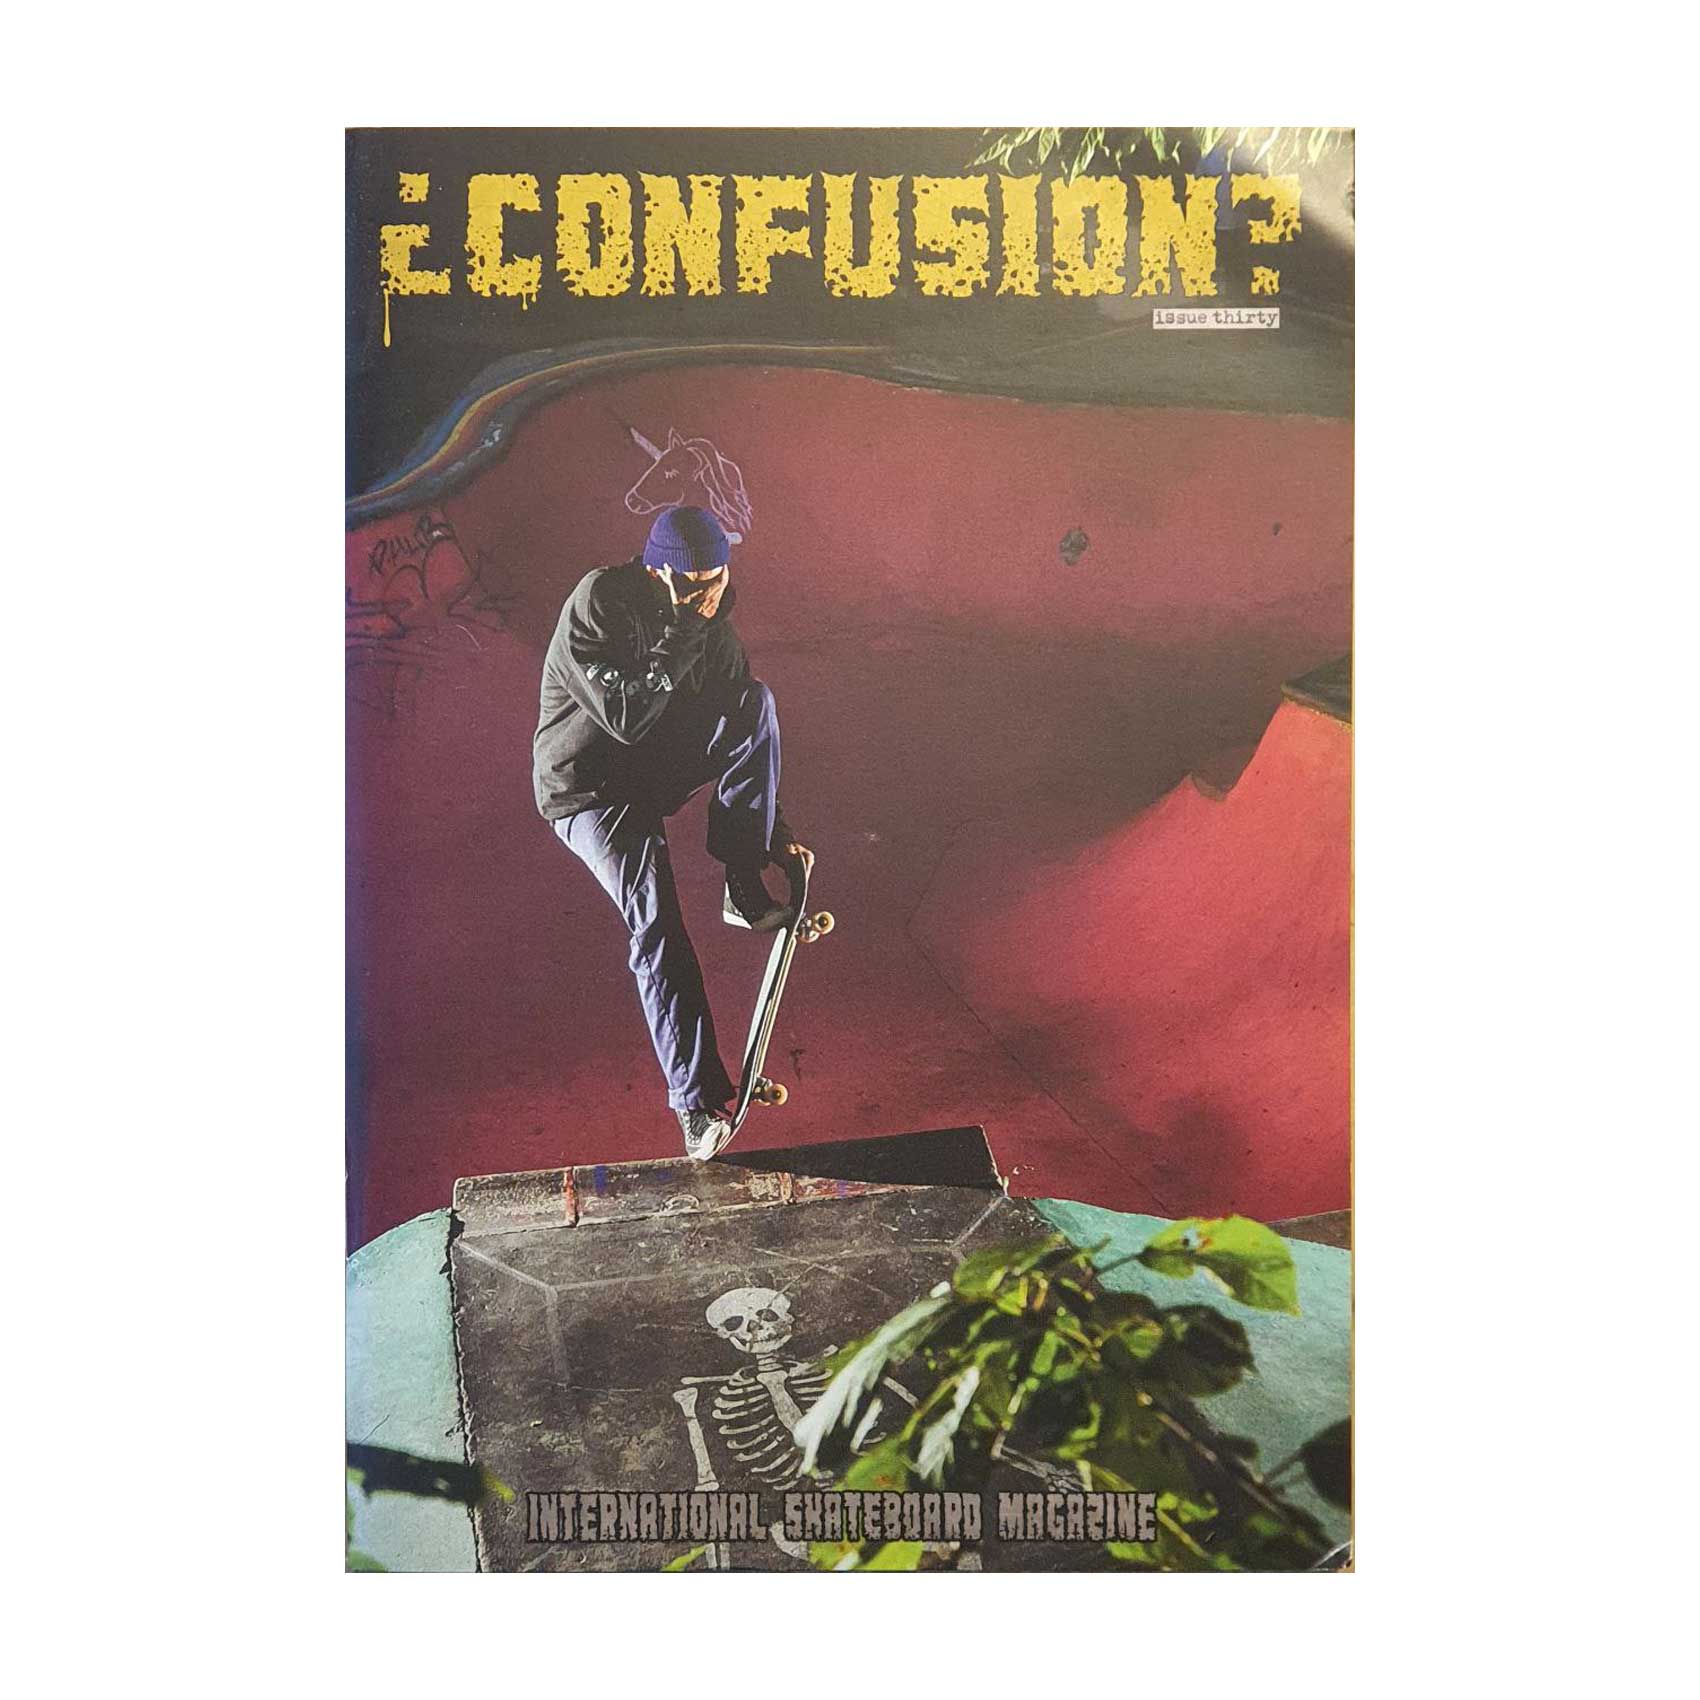 Confusion Magazine Issue 30